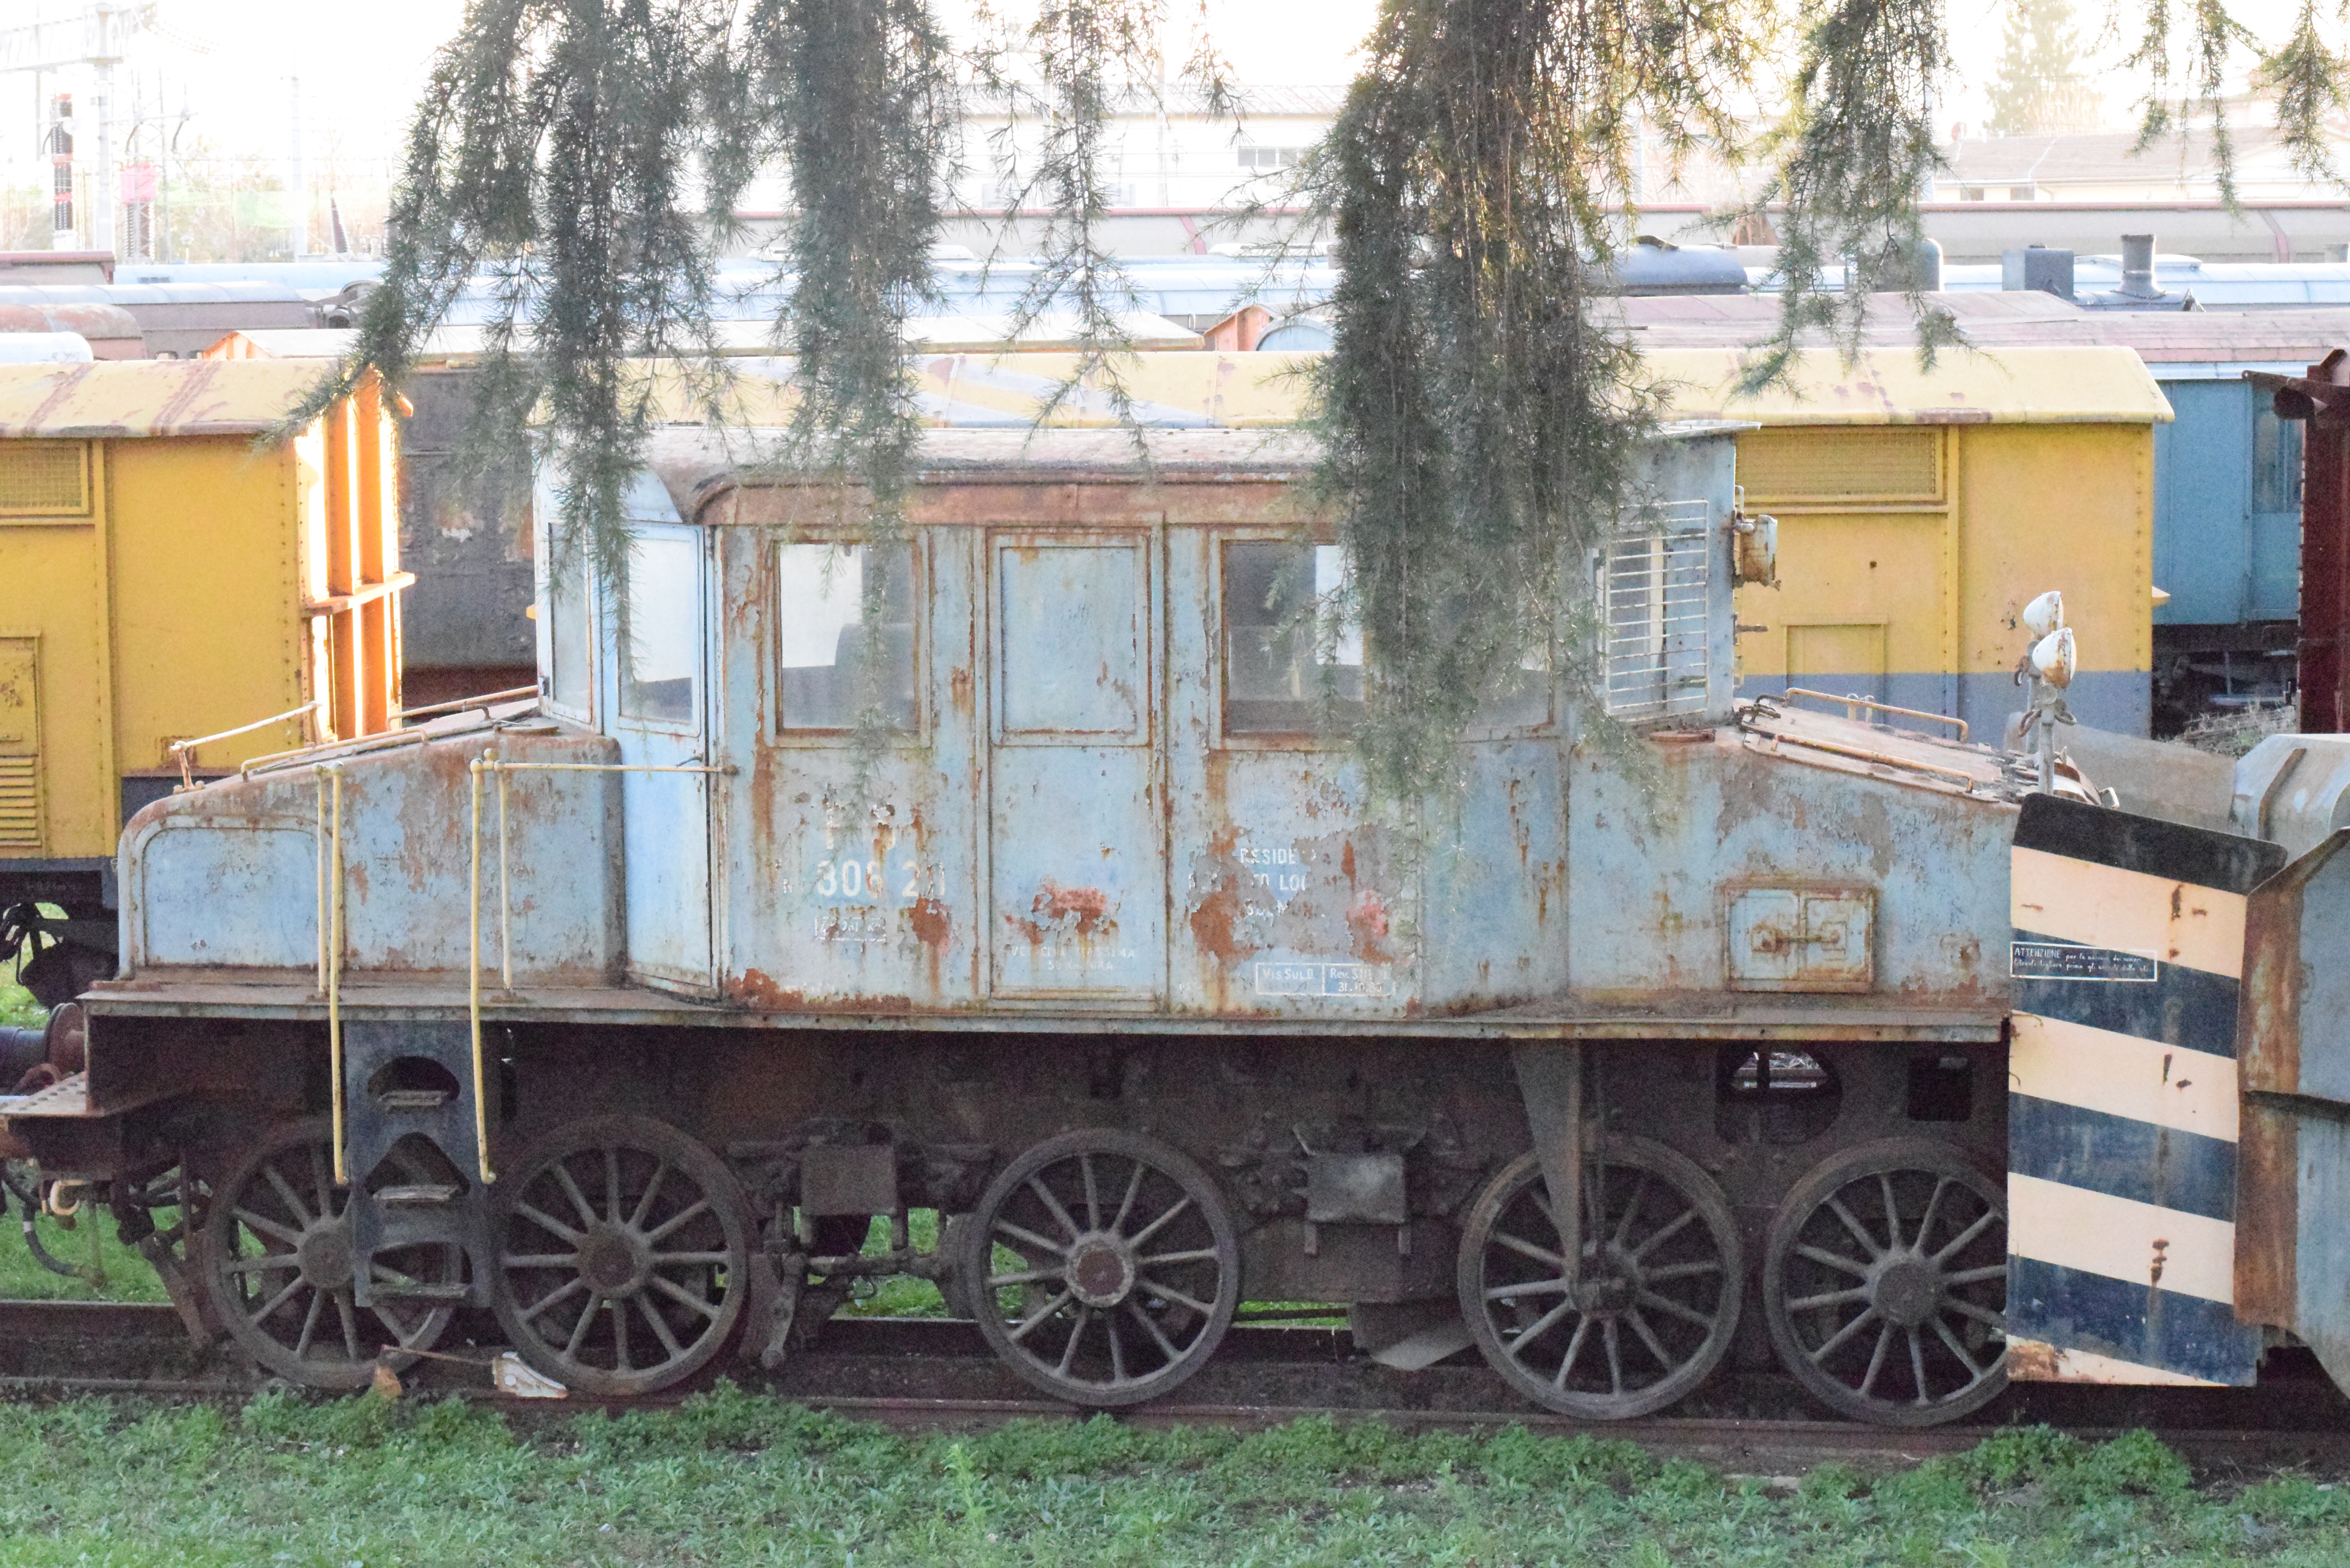 A Rusty Blue Train